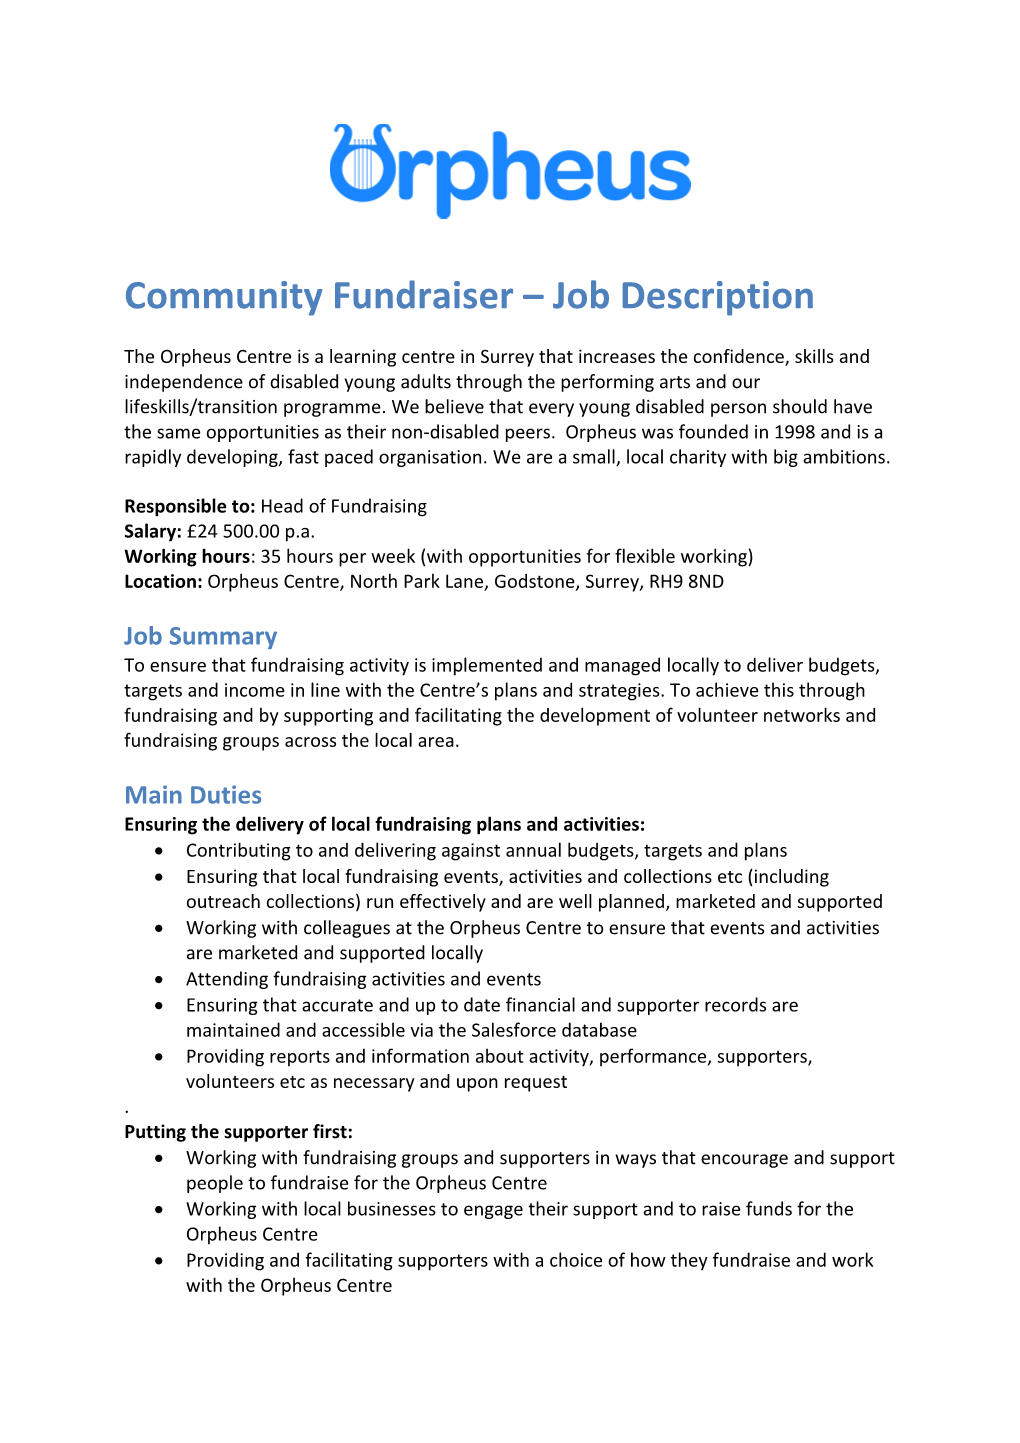 Community Fundraiser Job Description